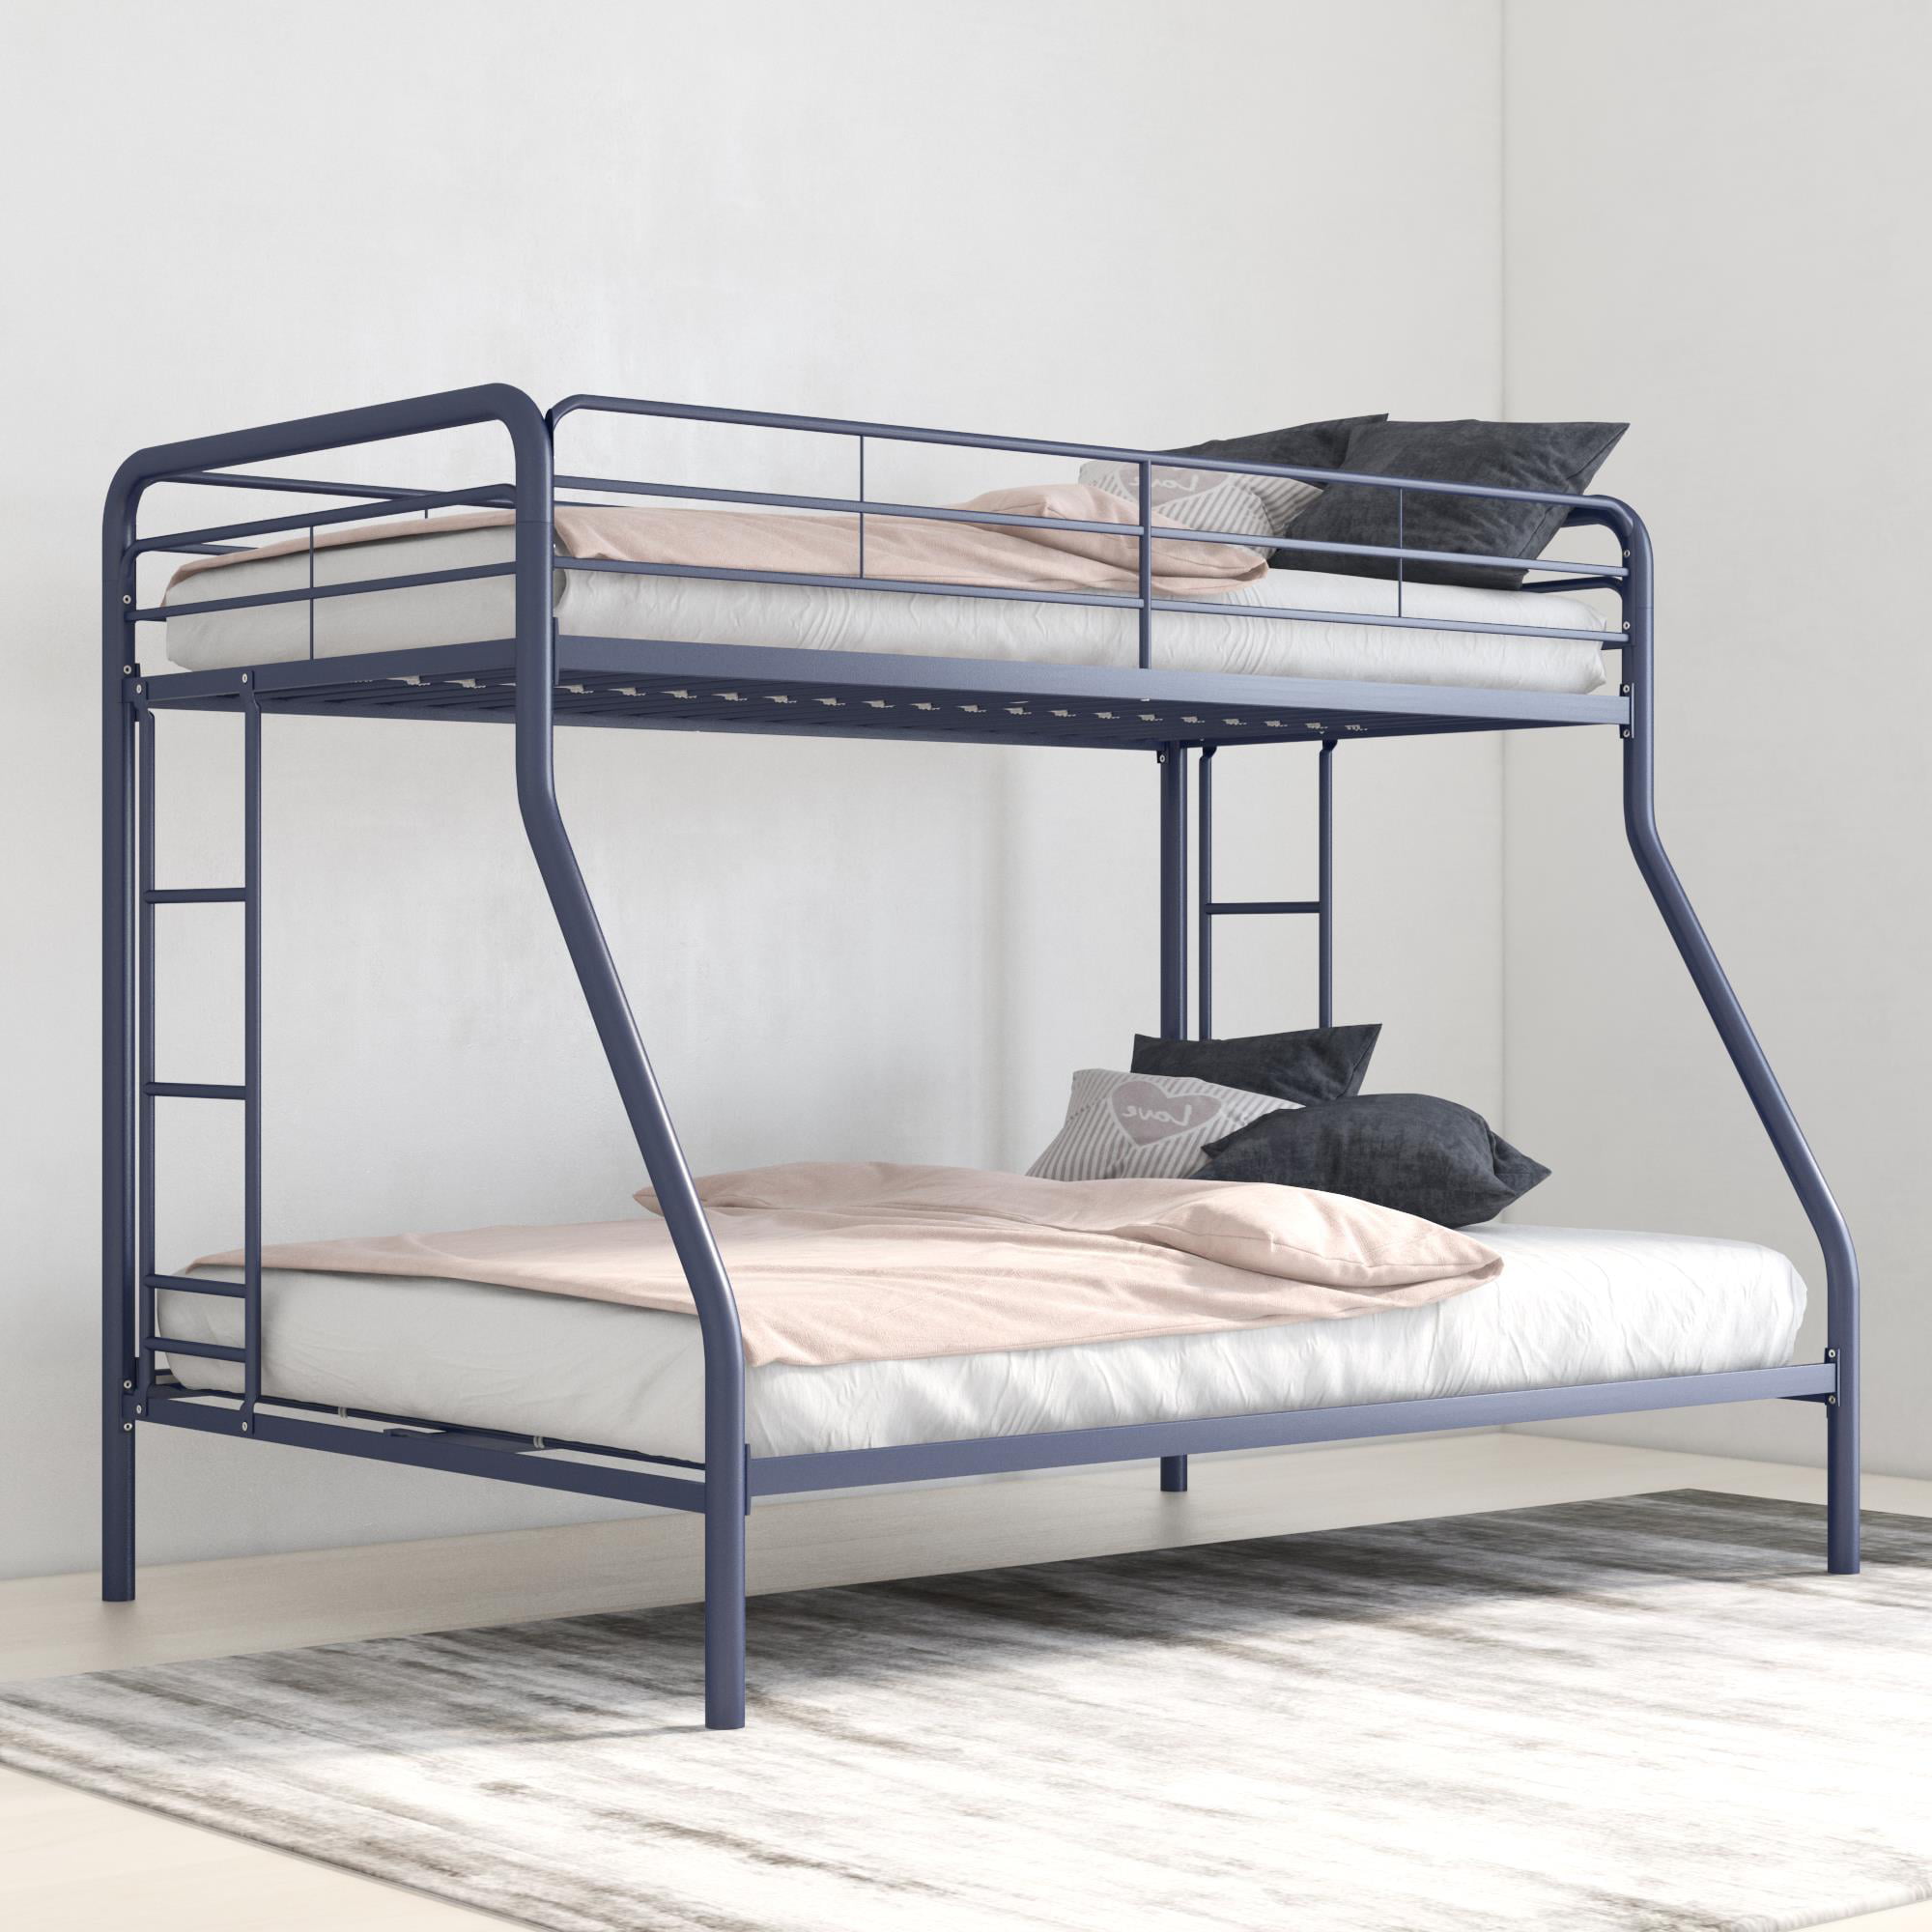 mattress for bunk bed at walmart